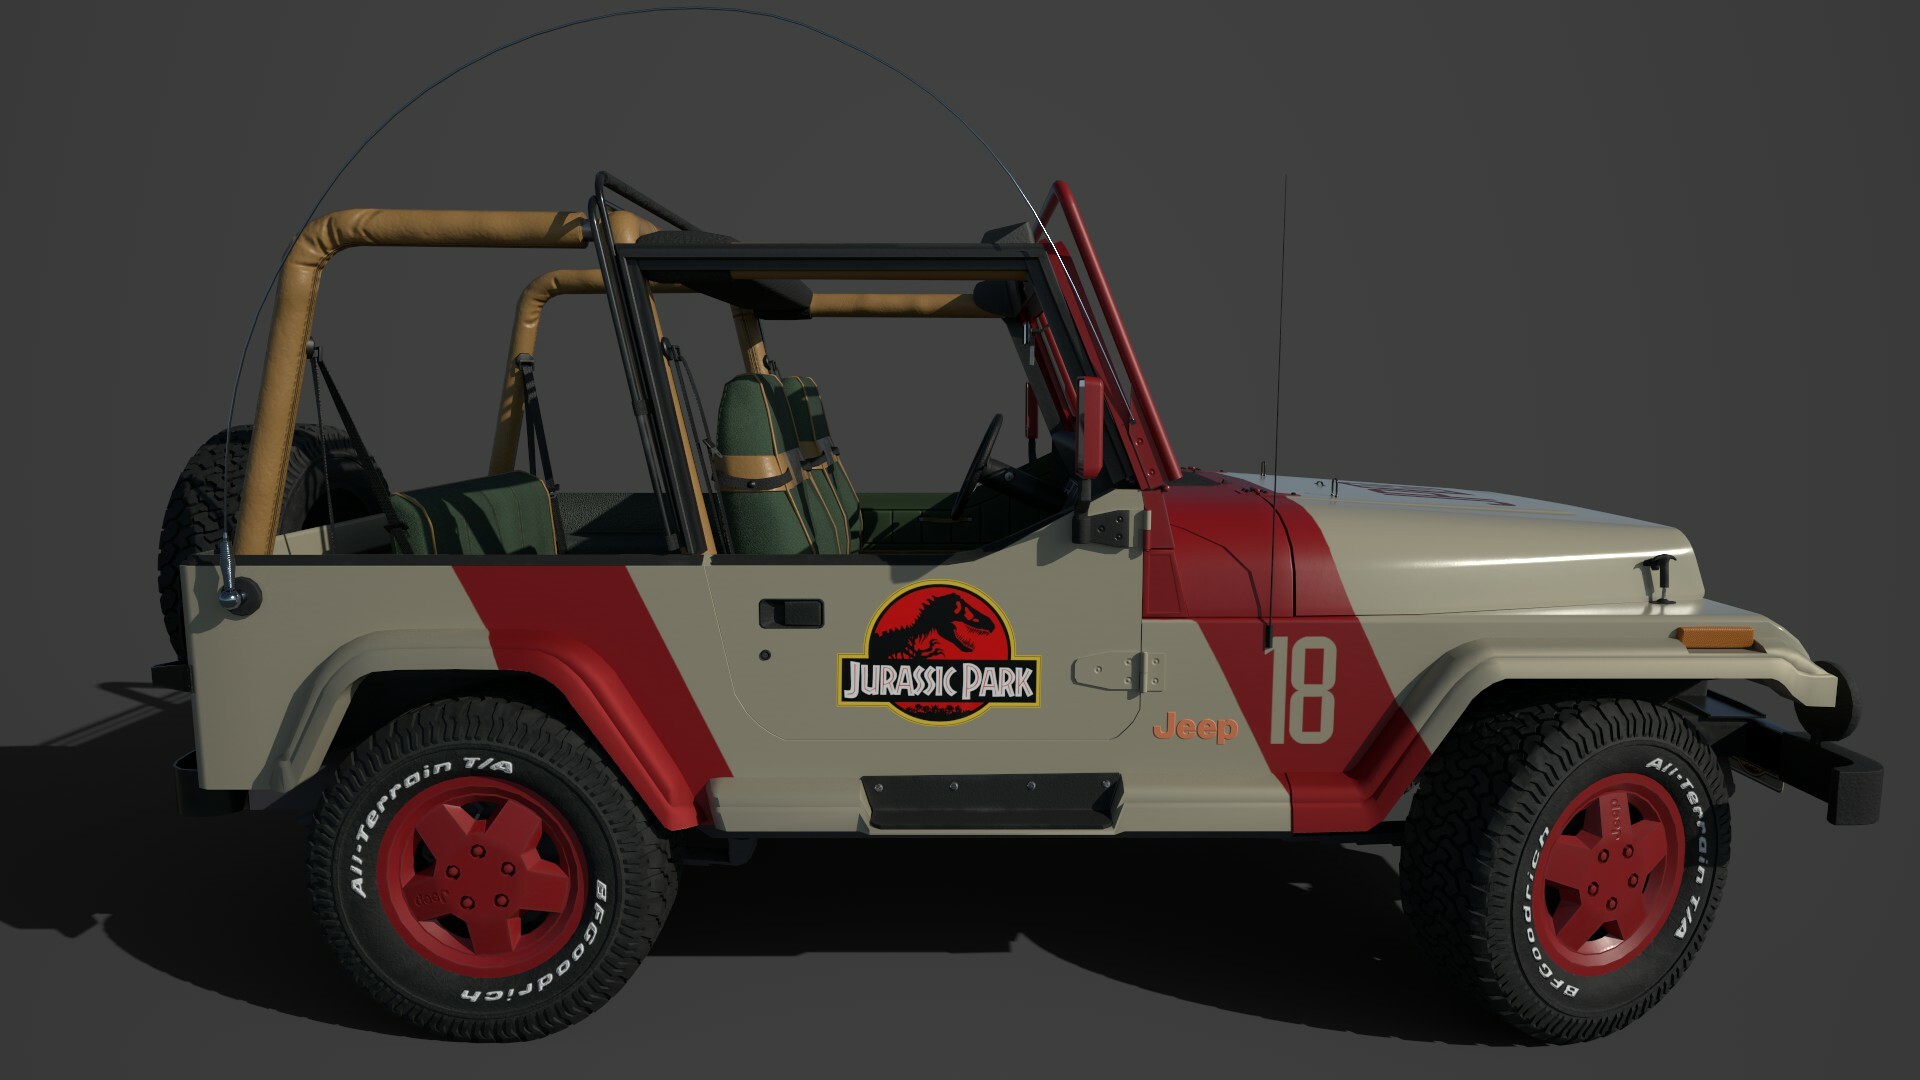 Nicholas Skelton - Jurassic Park Jeep #18